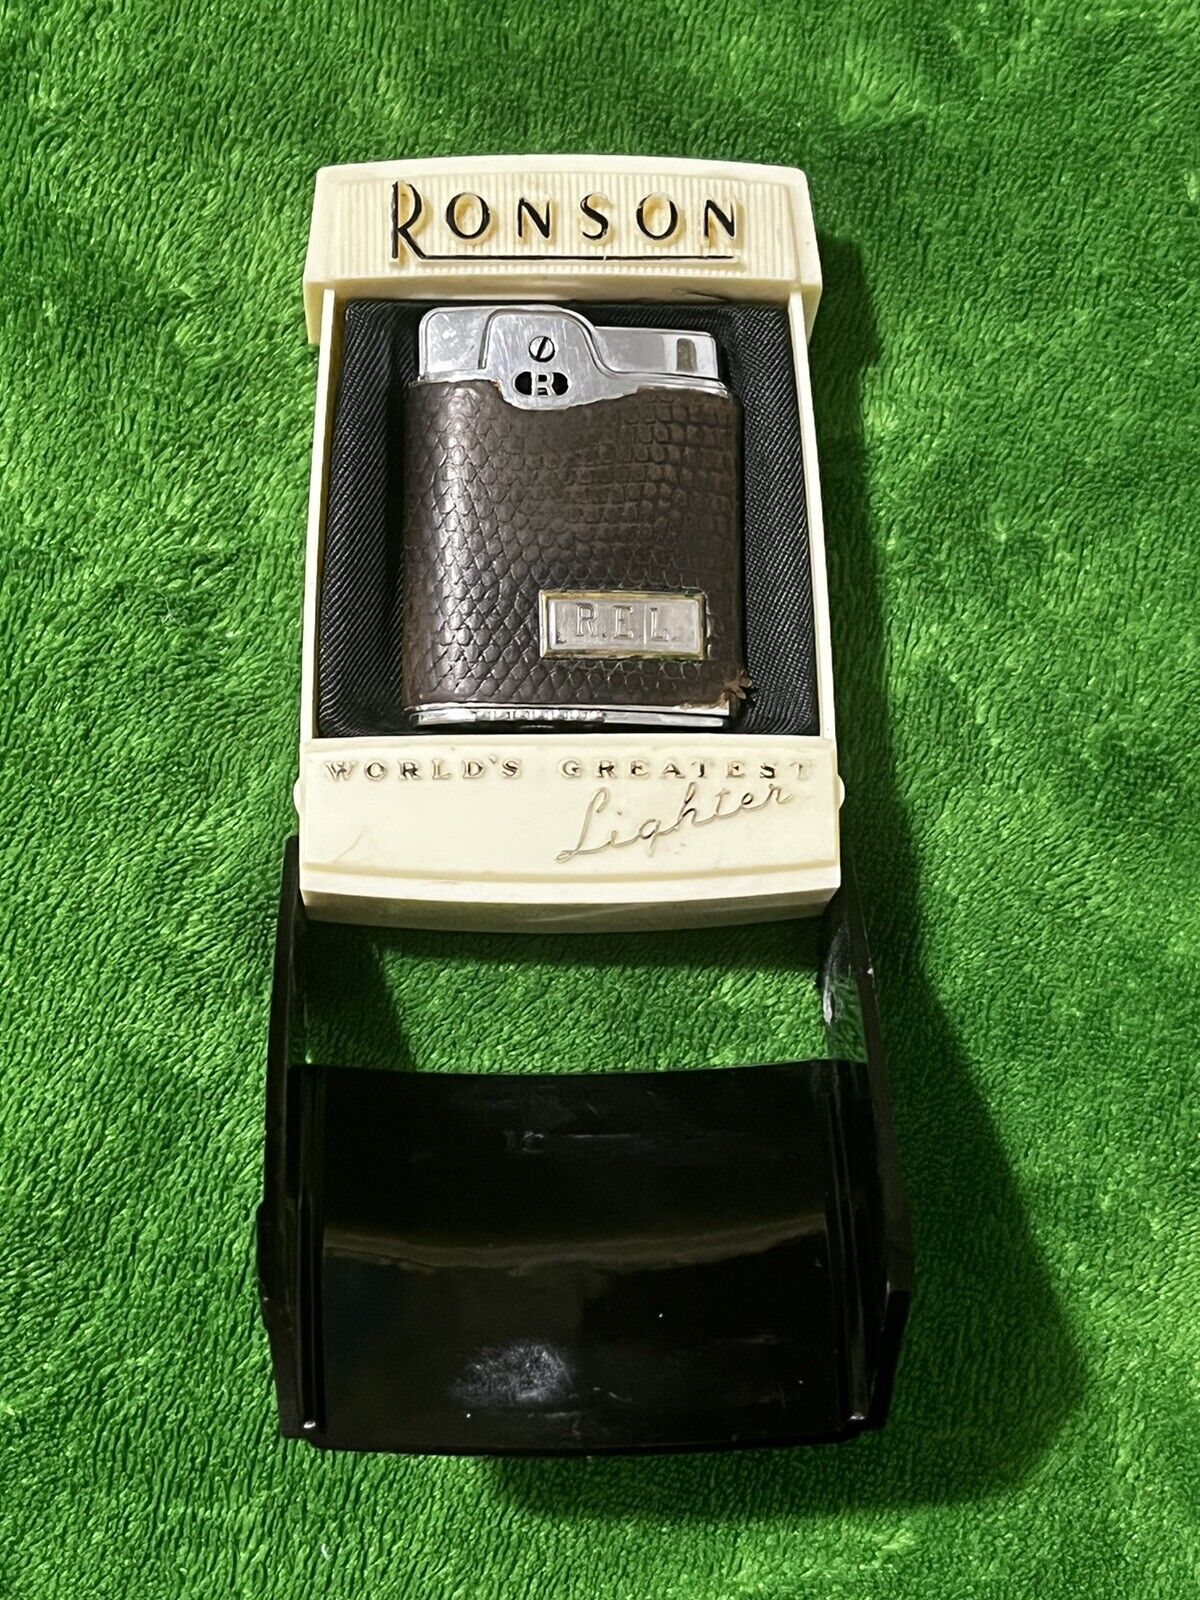 Ronson - World’s Greatest Lighter-Art Deco Celluloid Case & Lighter